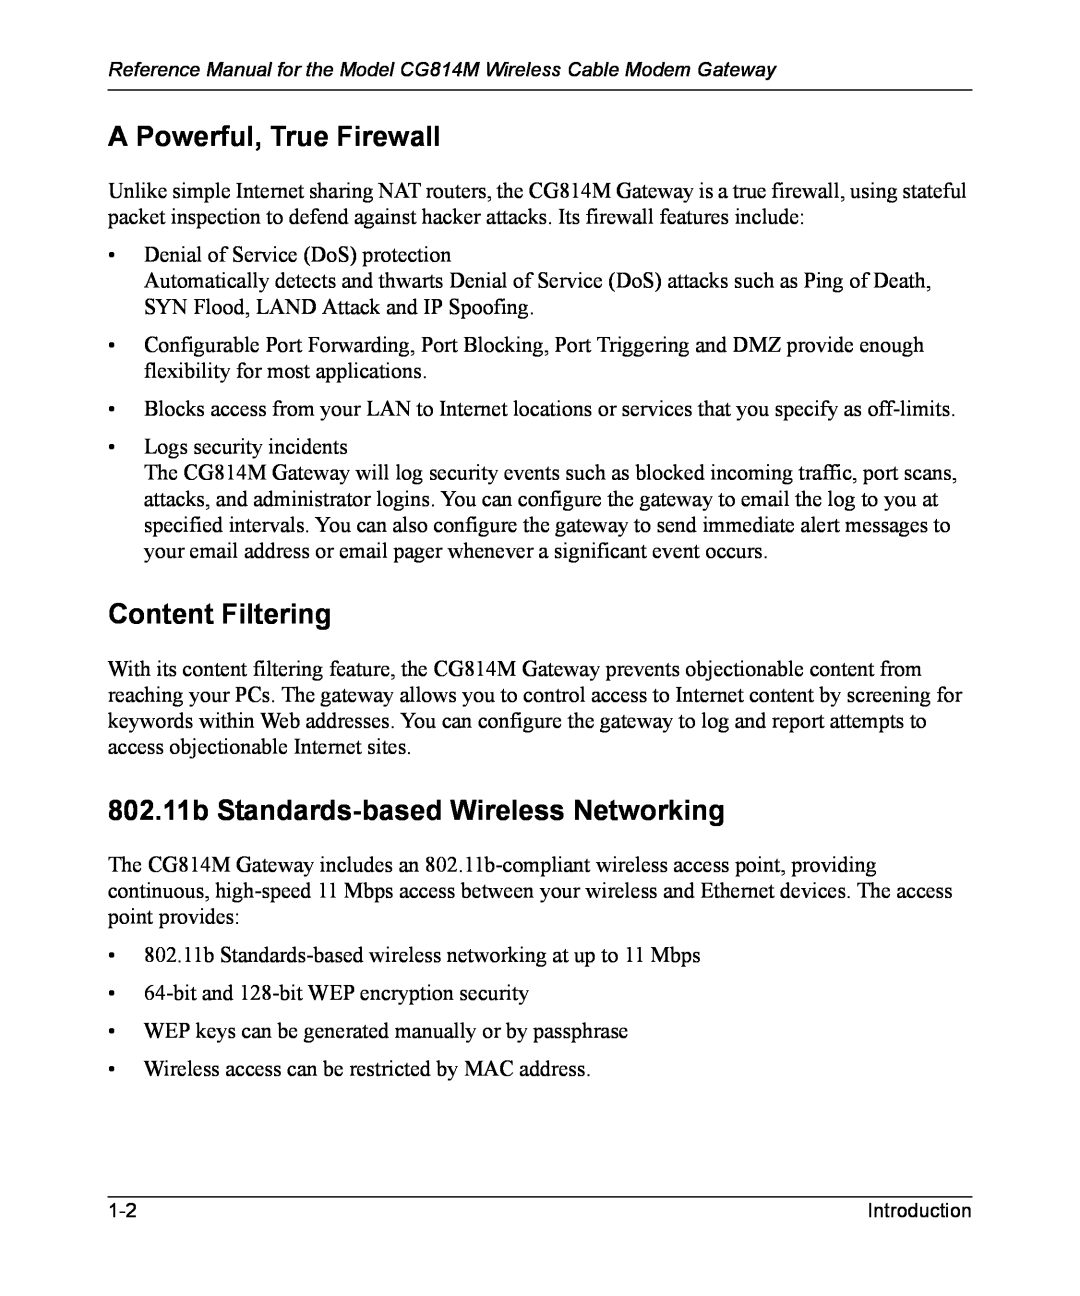 NETGEAR CG814M manual A Powerful, True Firewall, Content Filtering, 802.11b Standards-based Wireless Networking 